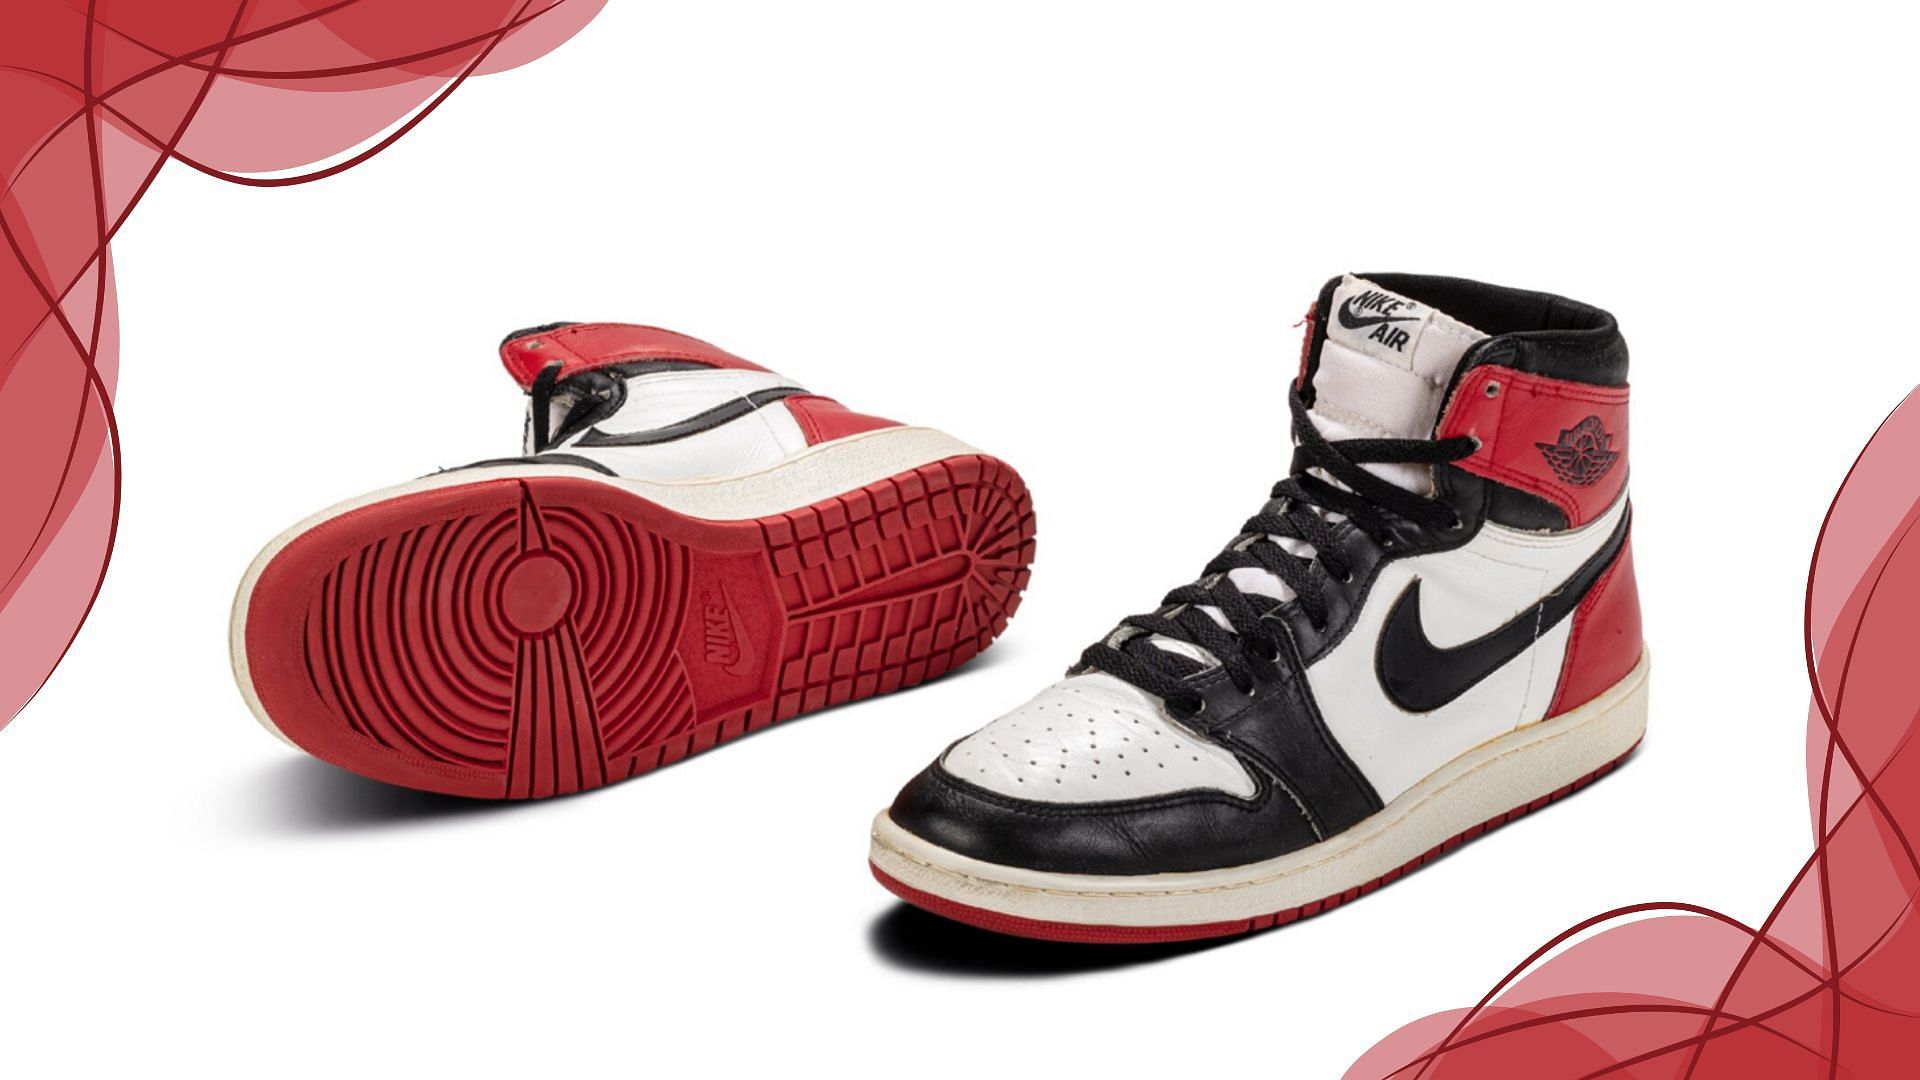 Air Jordan 1 High OG Black Toe Reimagined sneakers (Image via Instagram/@zsneakerheadz)